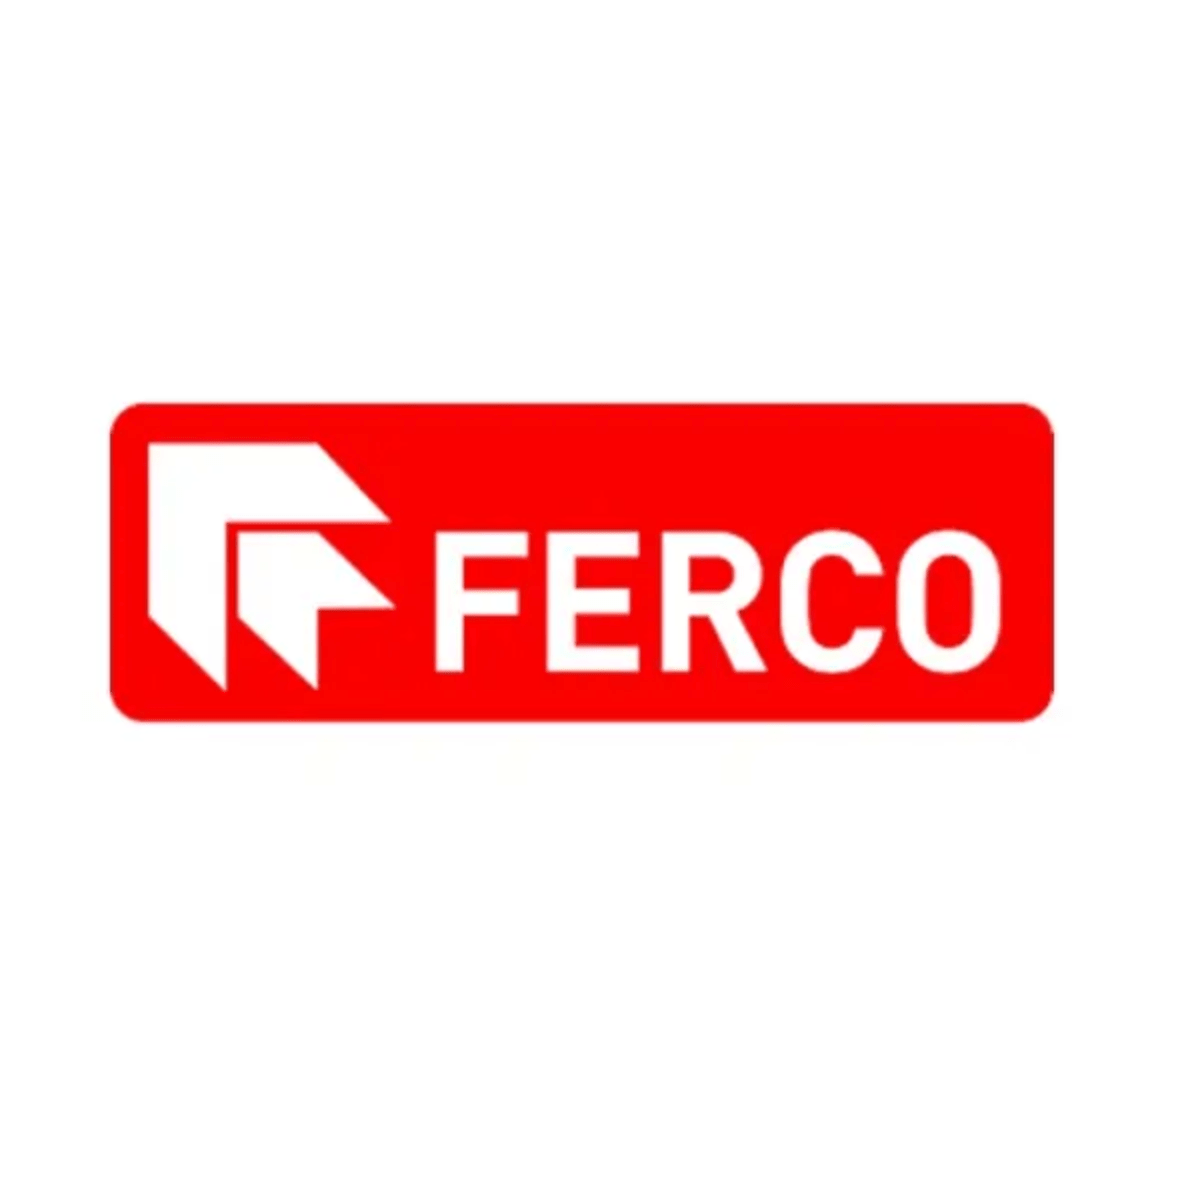 Pose de la marque Ferco par Bruno Vitrier